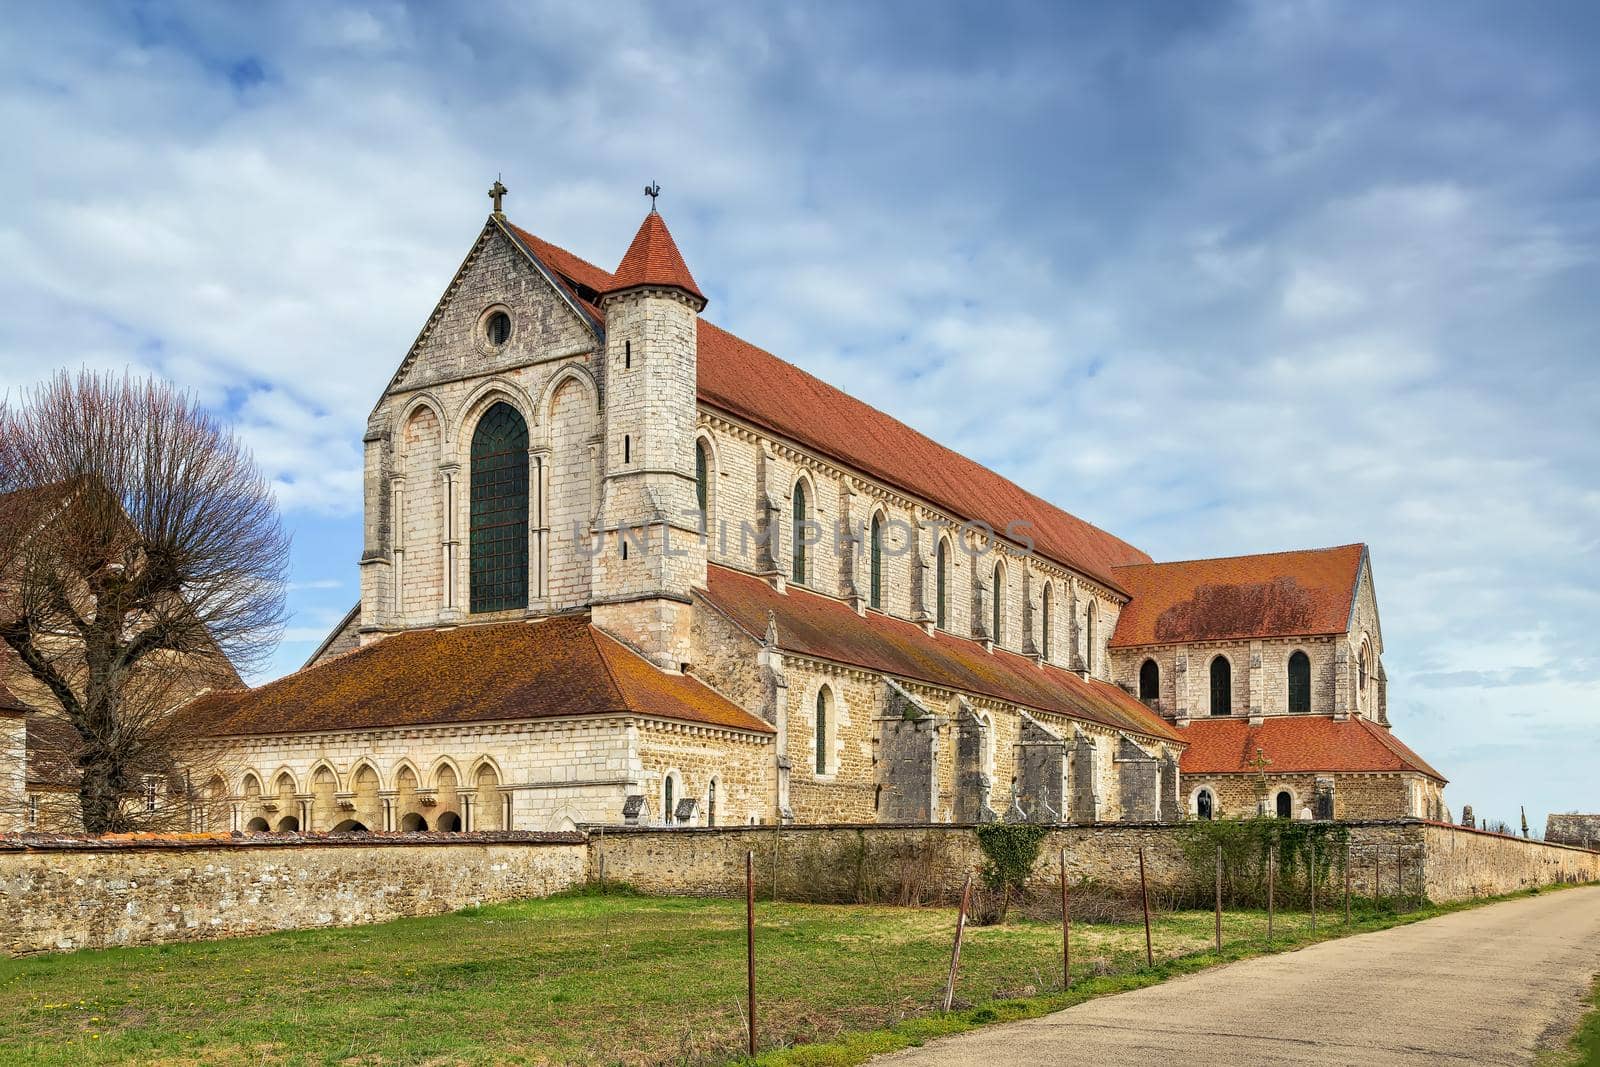 Pontigny Abbey, France by borisb17